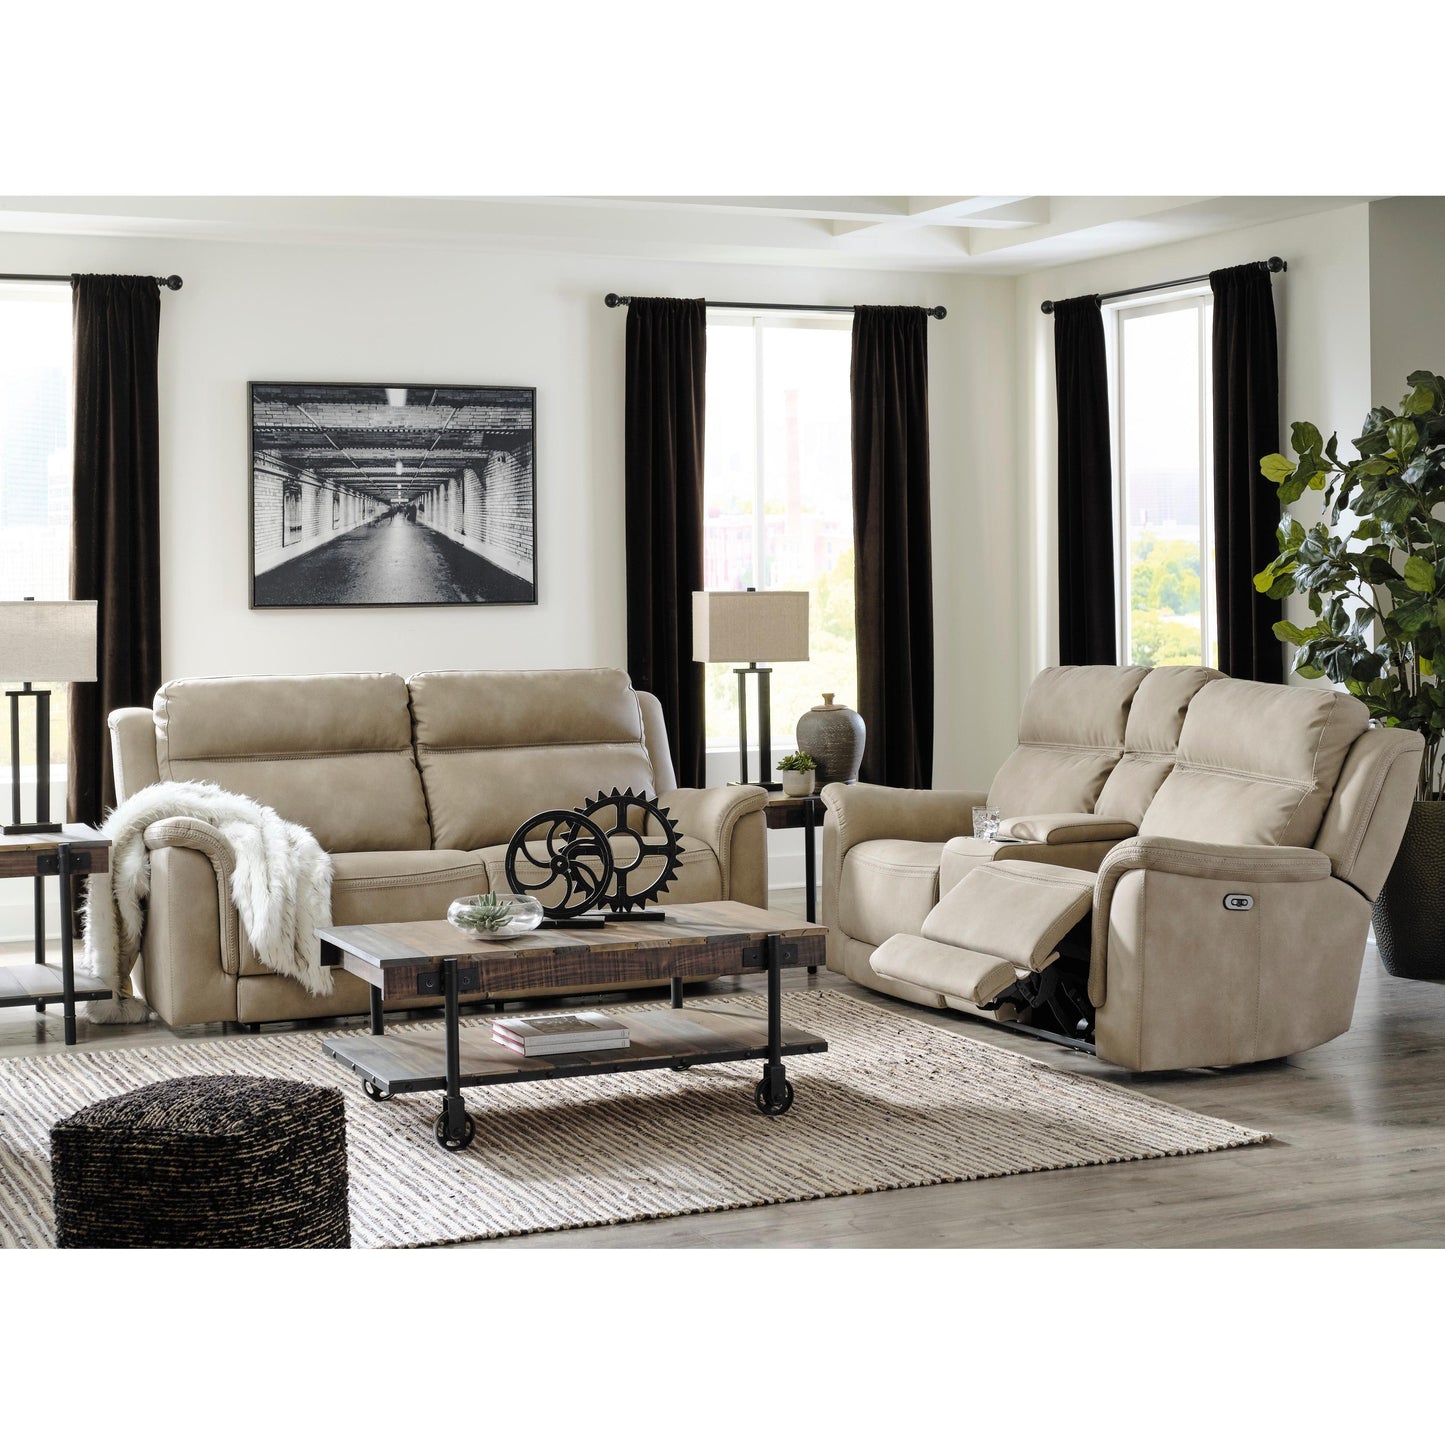 Signature Design by Ashley Next-Gen Durapella 59302 2 pc Power Reclining Living Room Set IMAGE 1